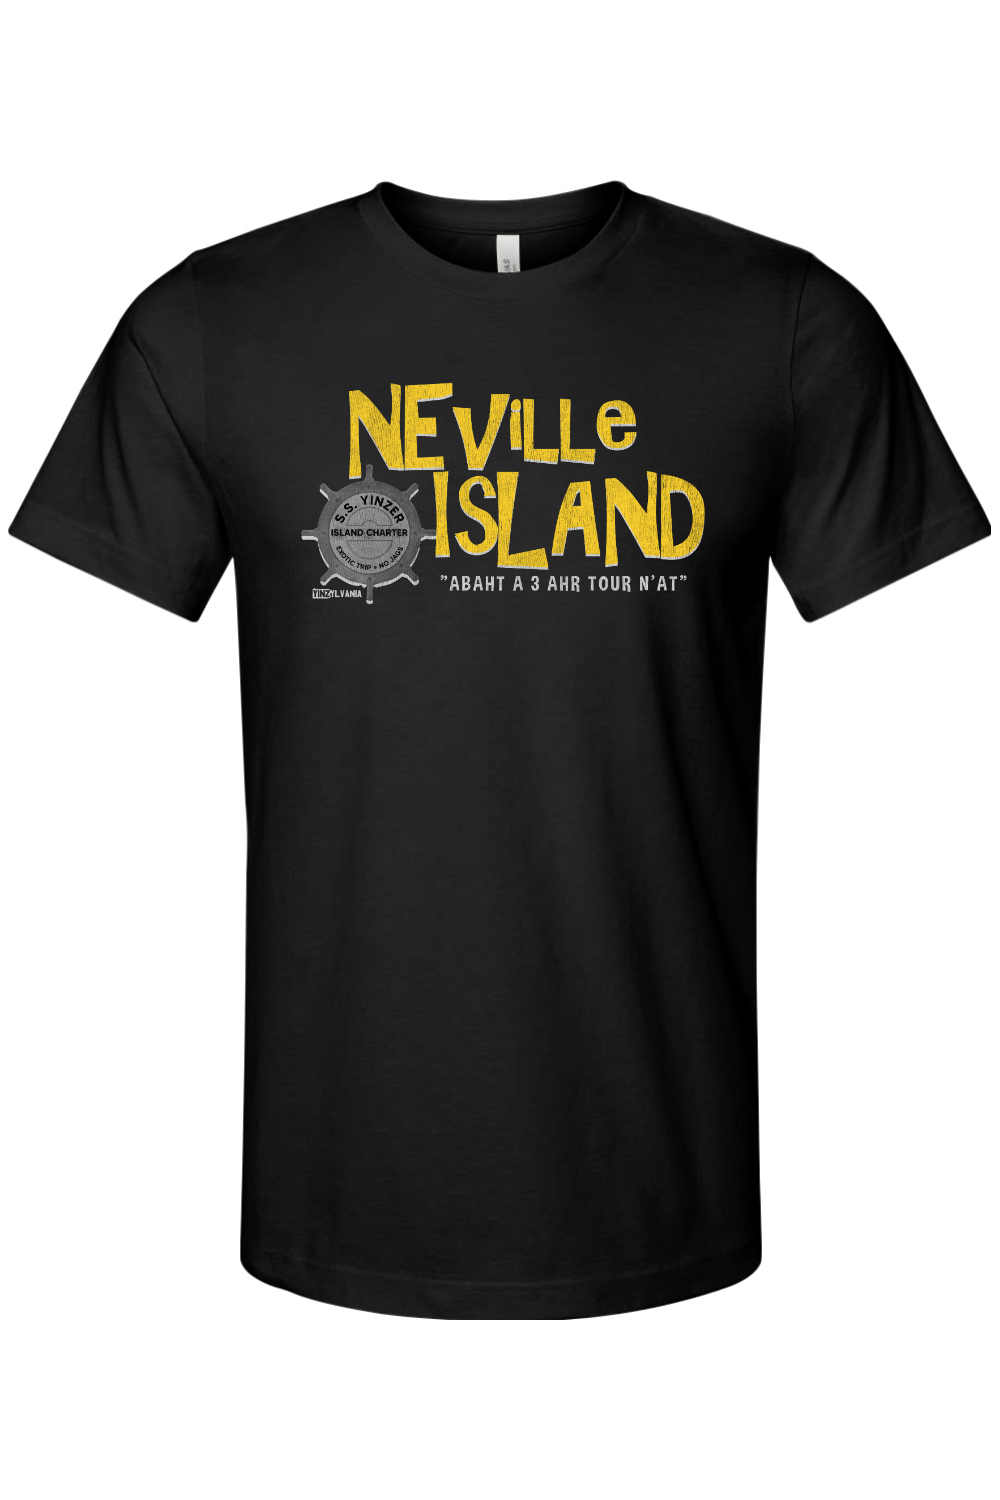 Neville Island - S.S. Yinzer - Yinzylvania